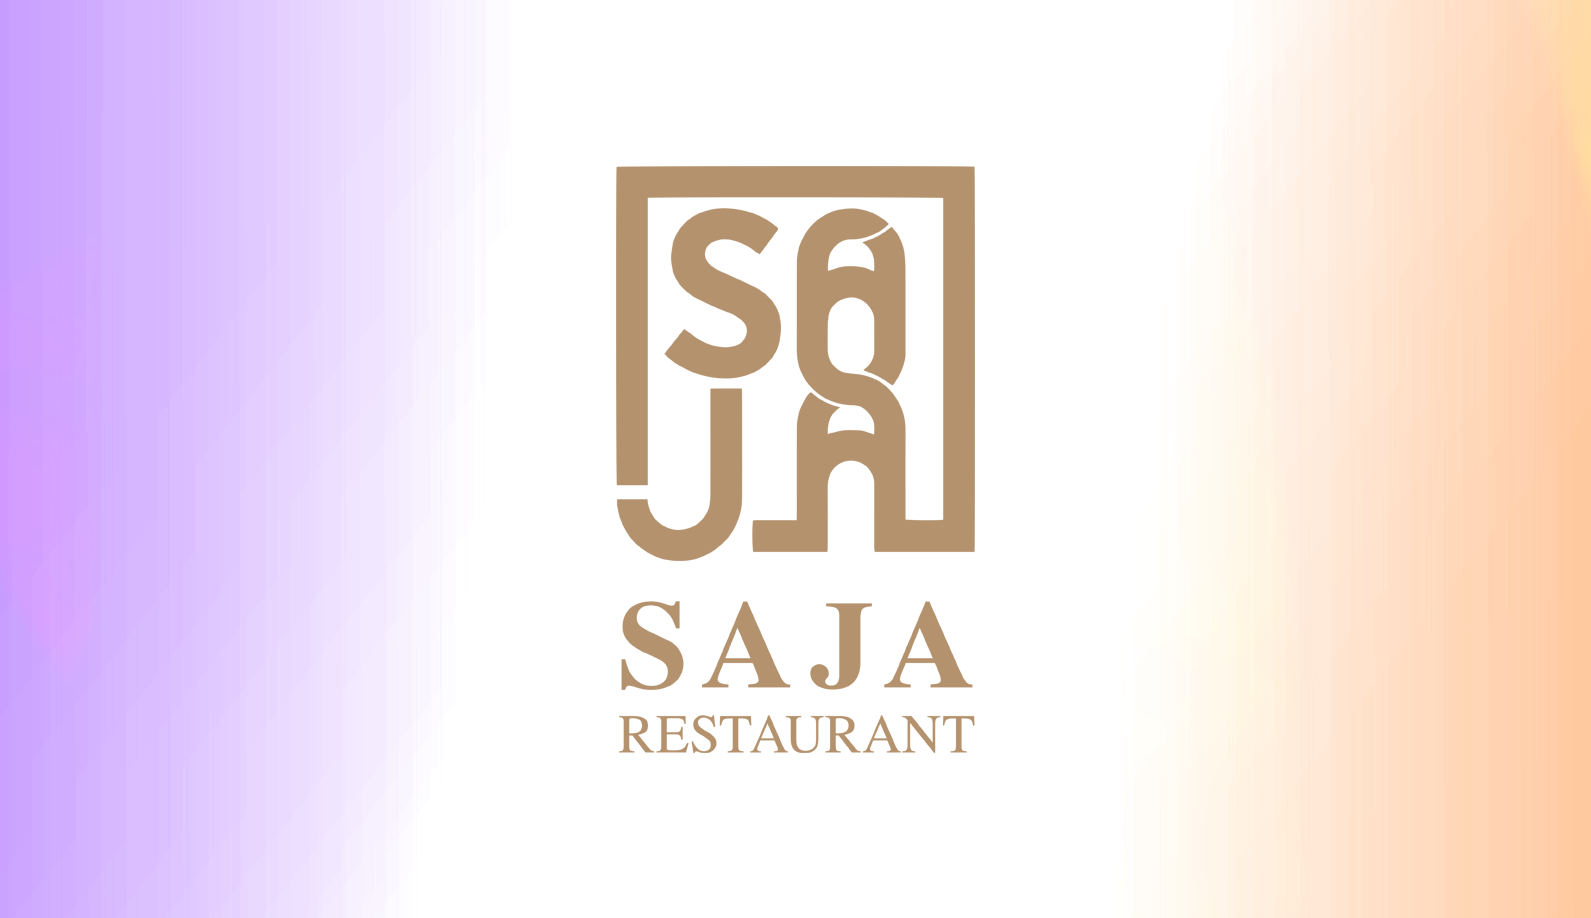 Saja Restaurant